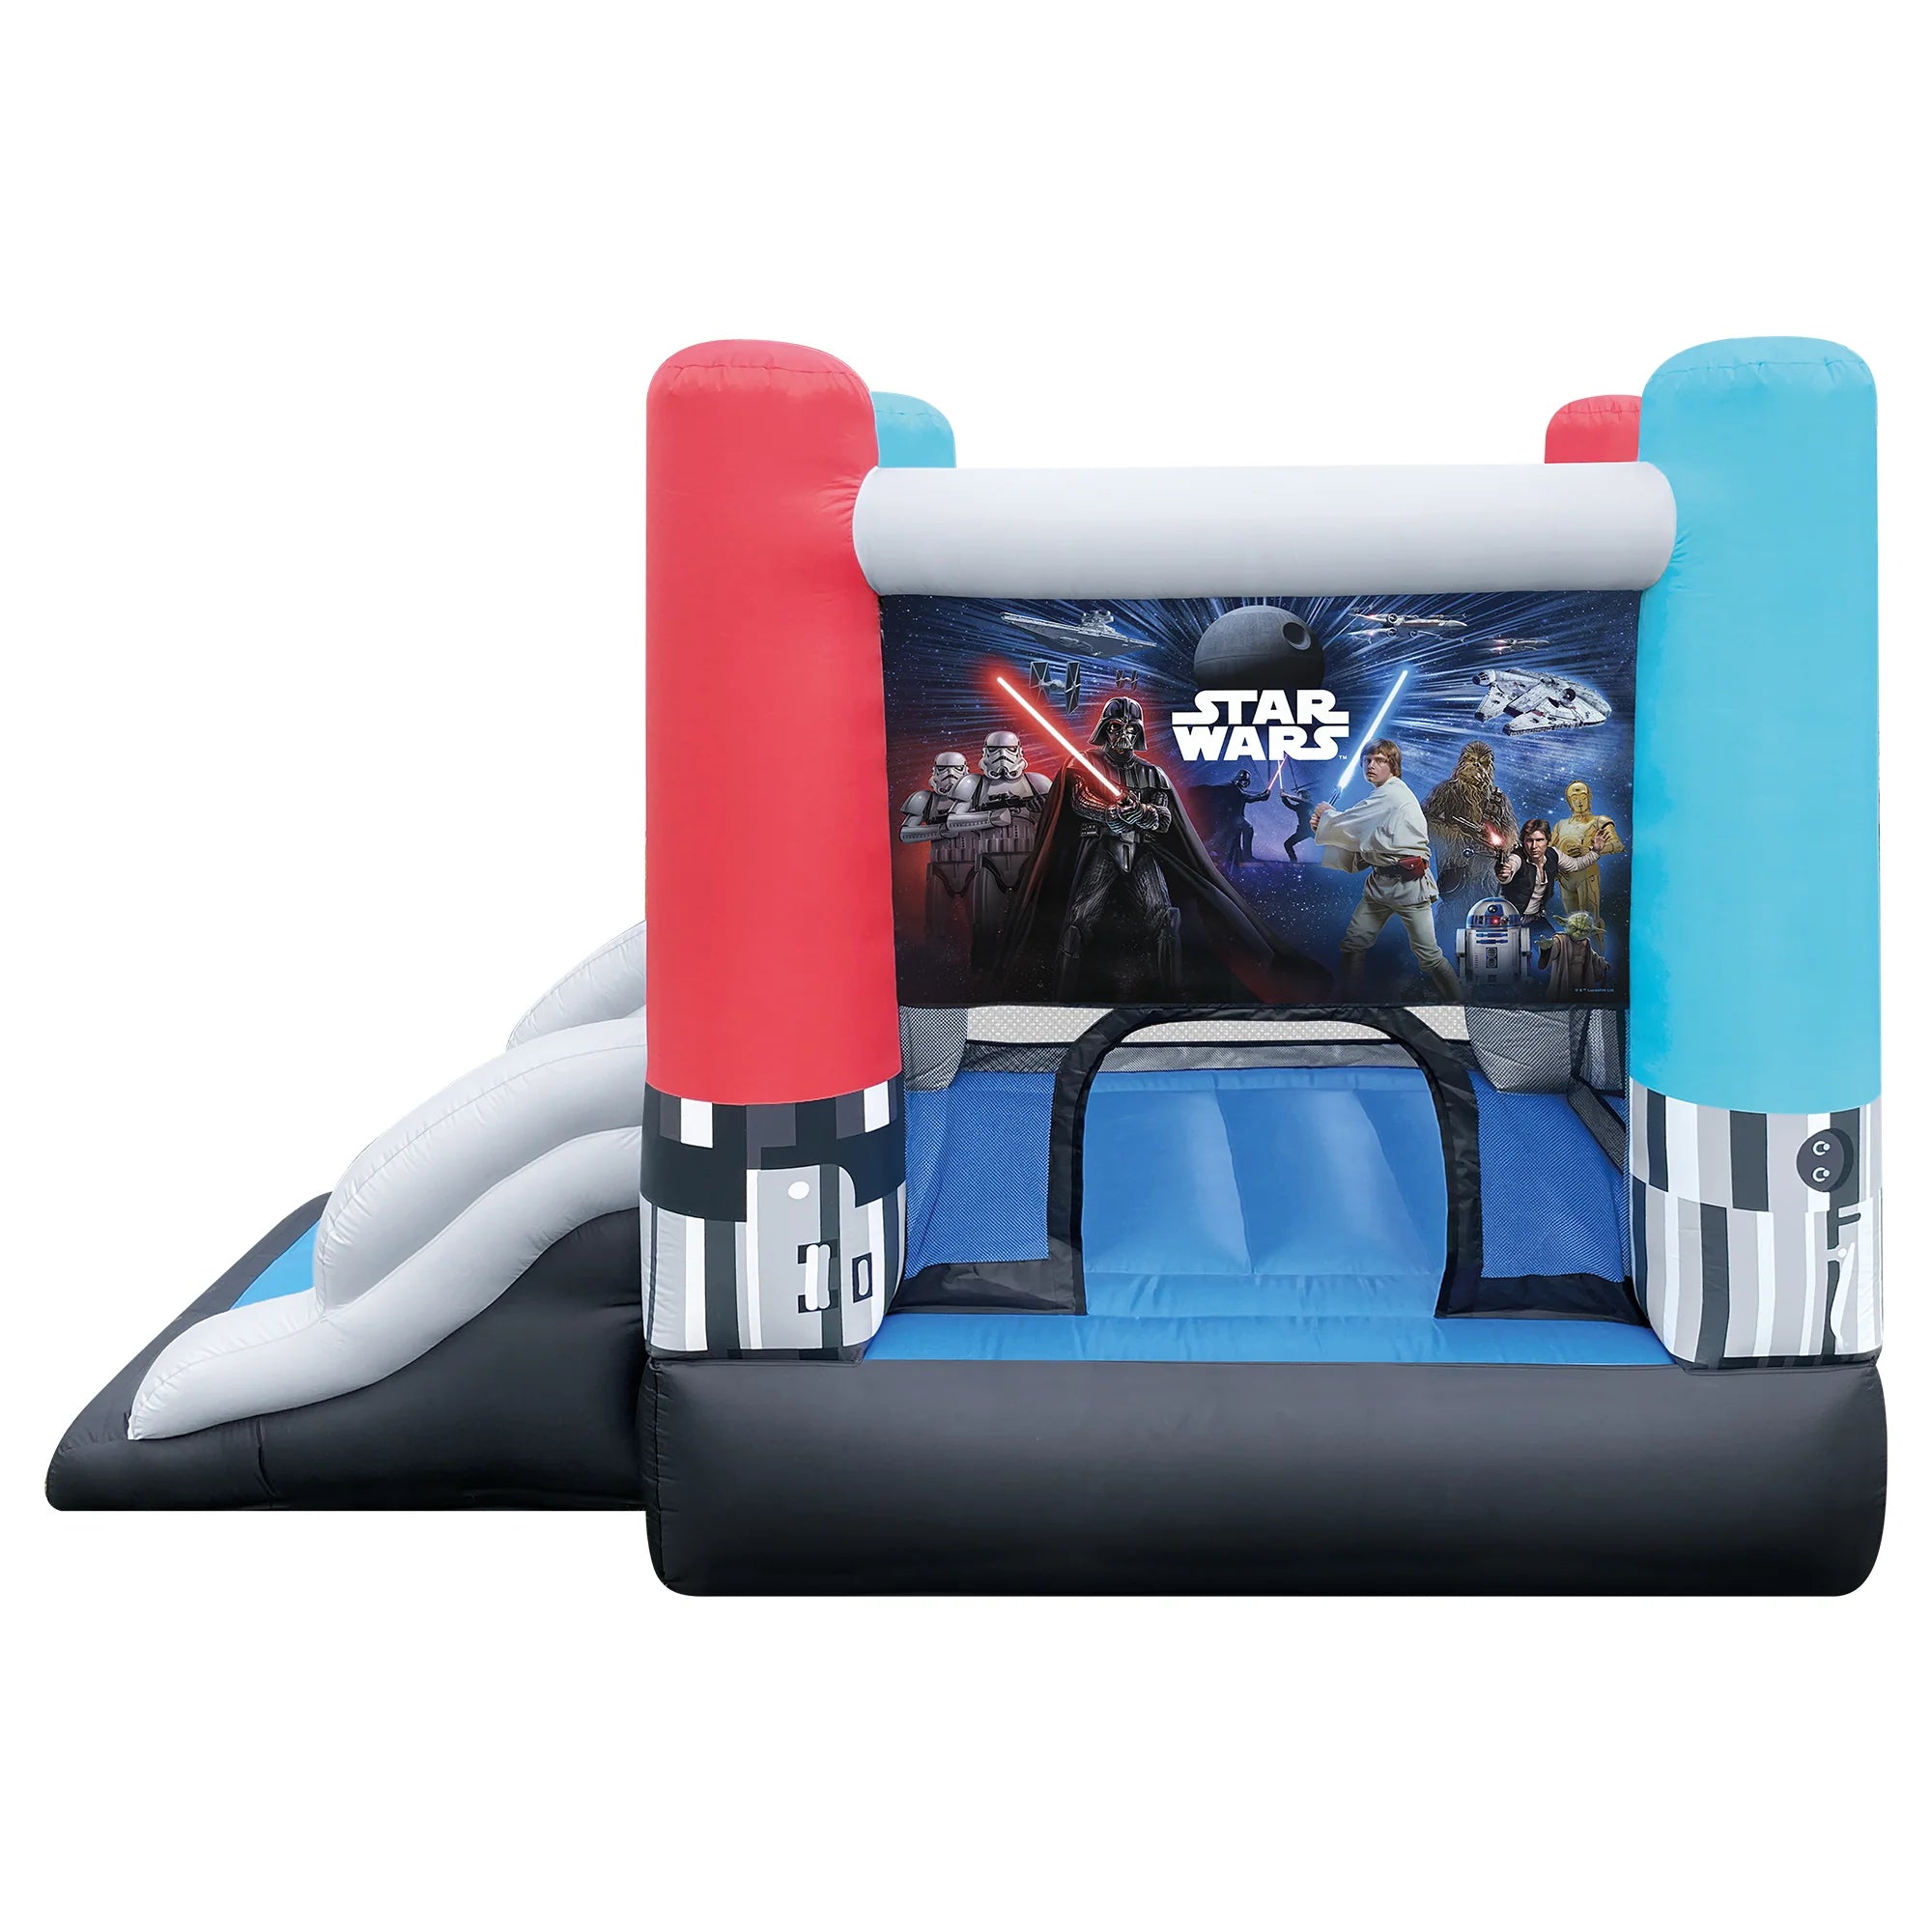 Disney Star Wars Bounce House Inflatable Slide